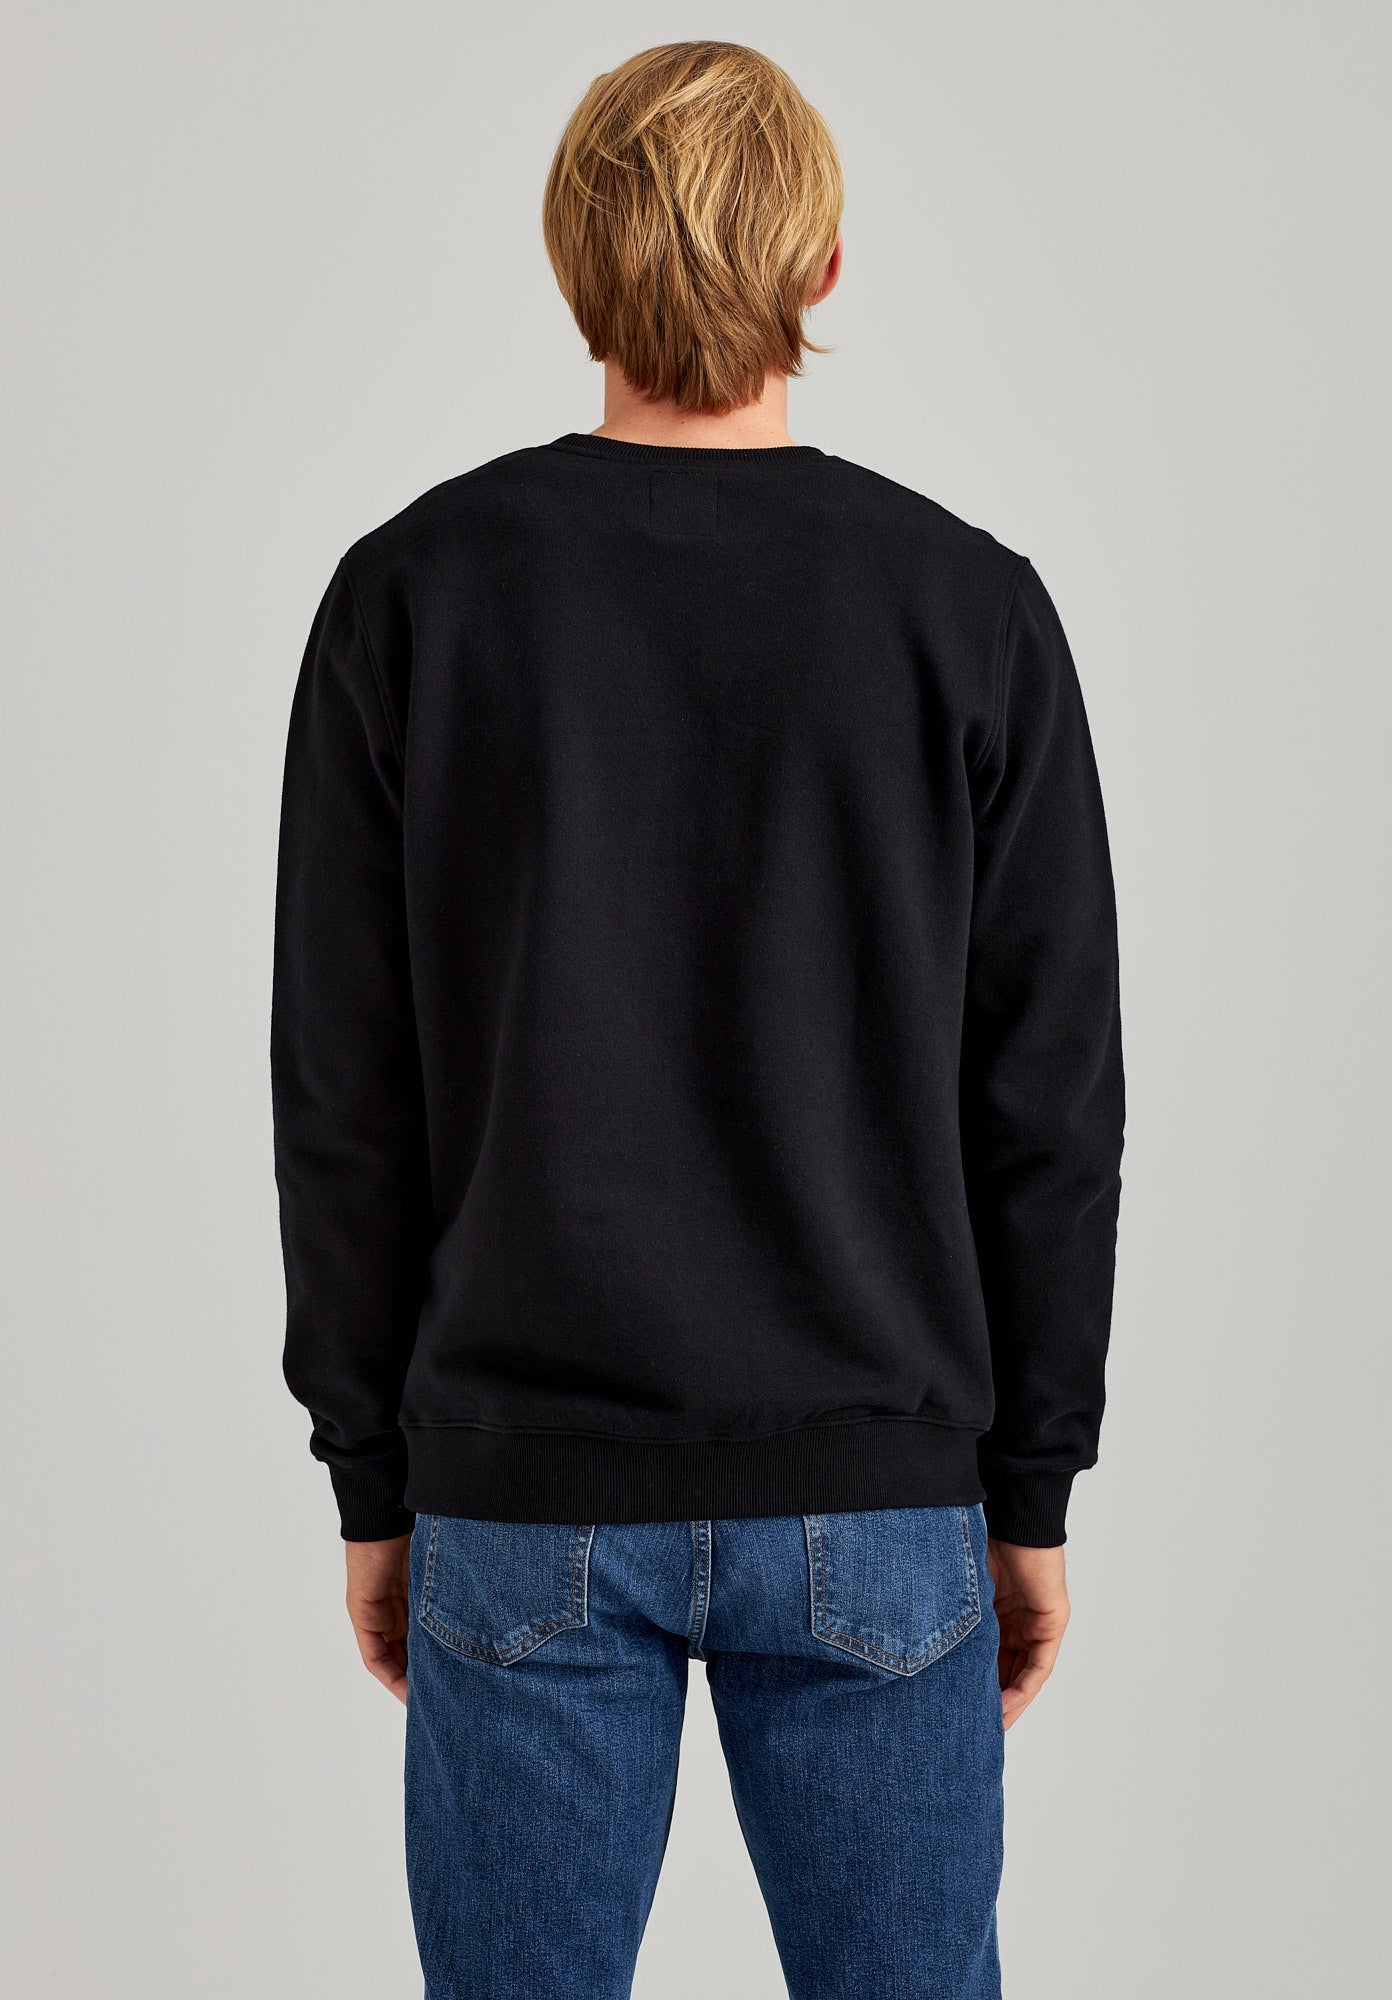 Black sweater TT1029 made of 100% organic cotton from Thokkthokk Sweater